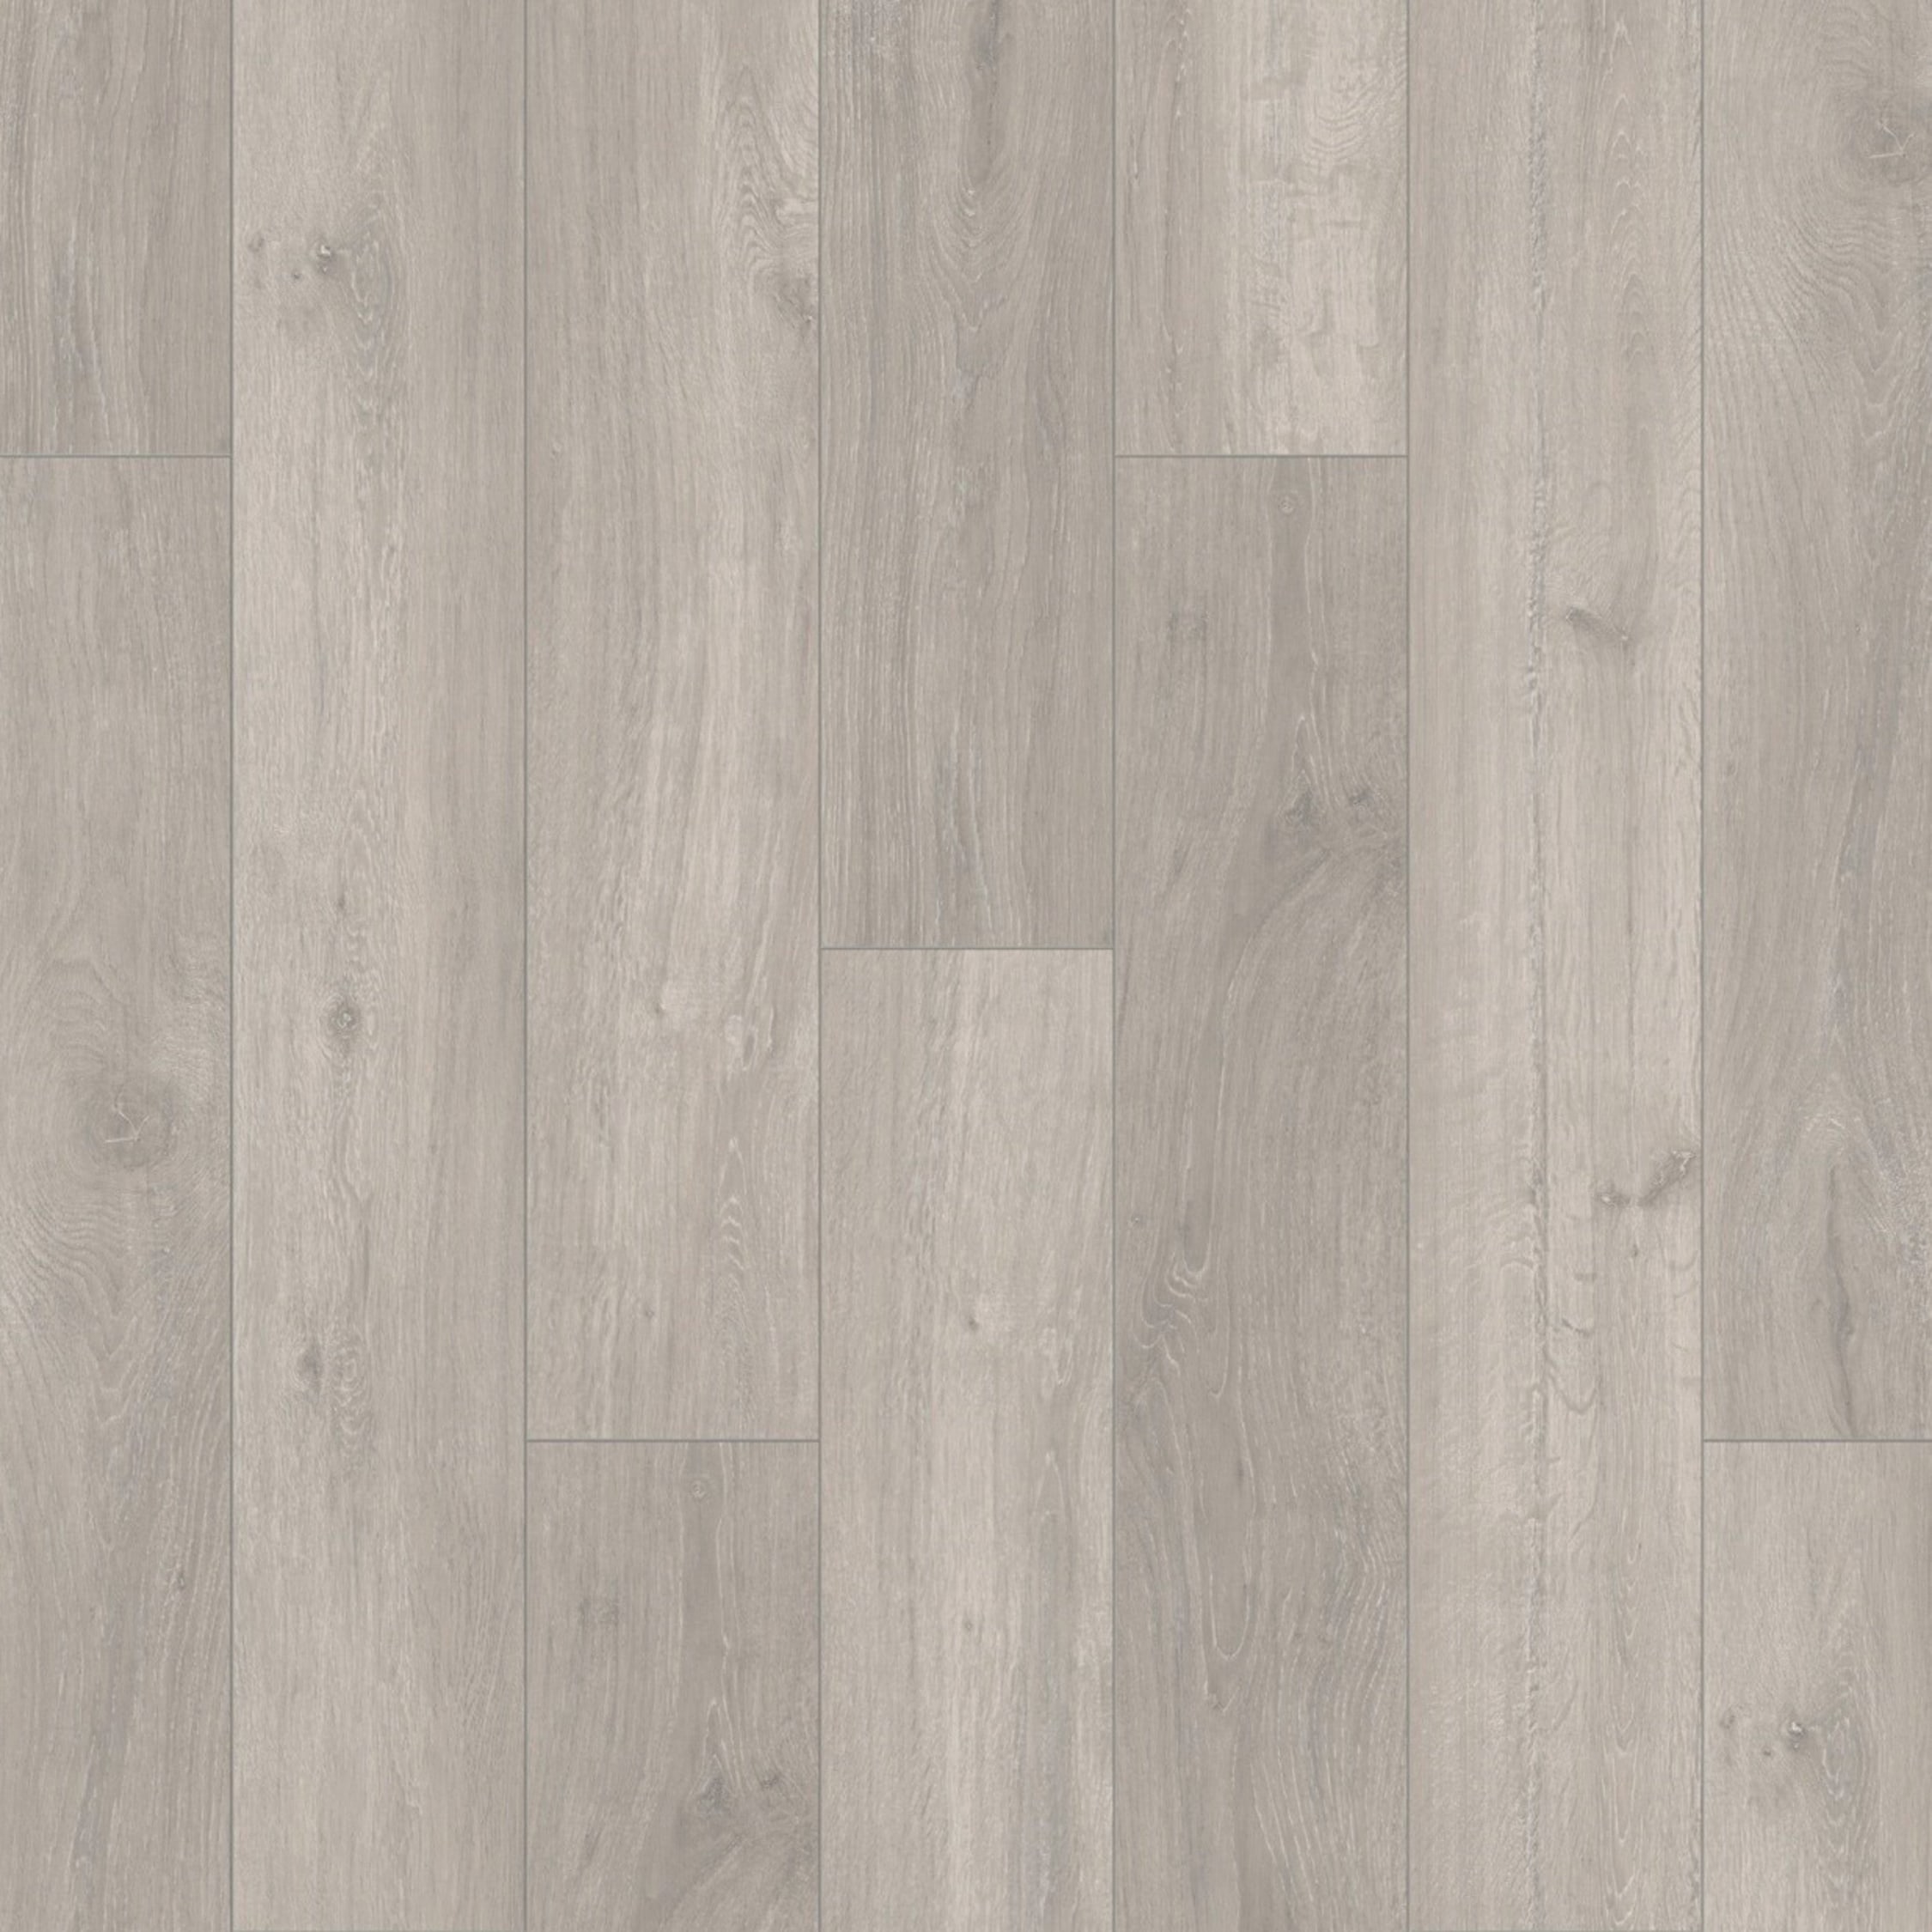 Bygger Skoleuddannelse Mockingbird Arreton Light Grey Oak 12mm Laminate Flooring - 1.48m² | Wickes.co.uk